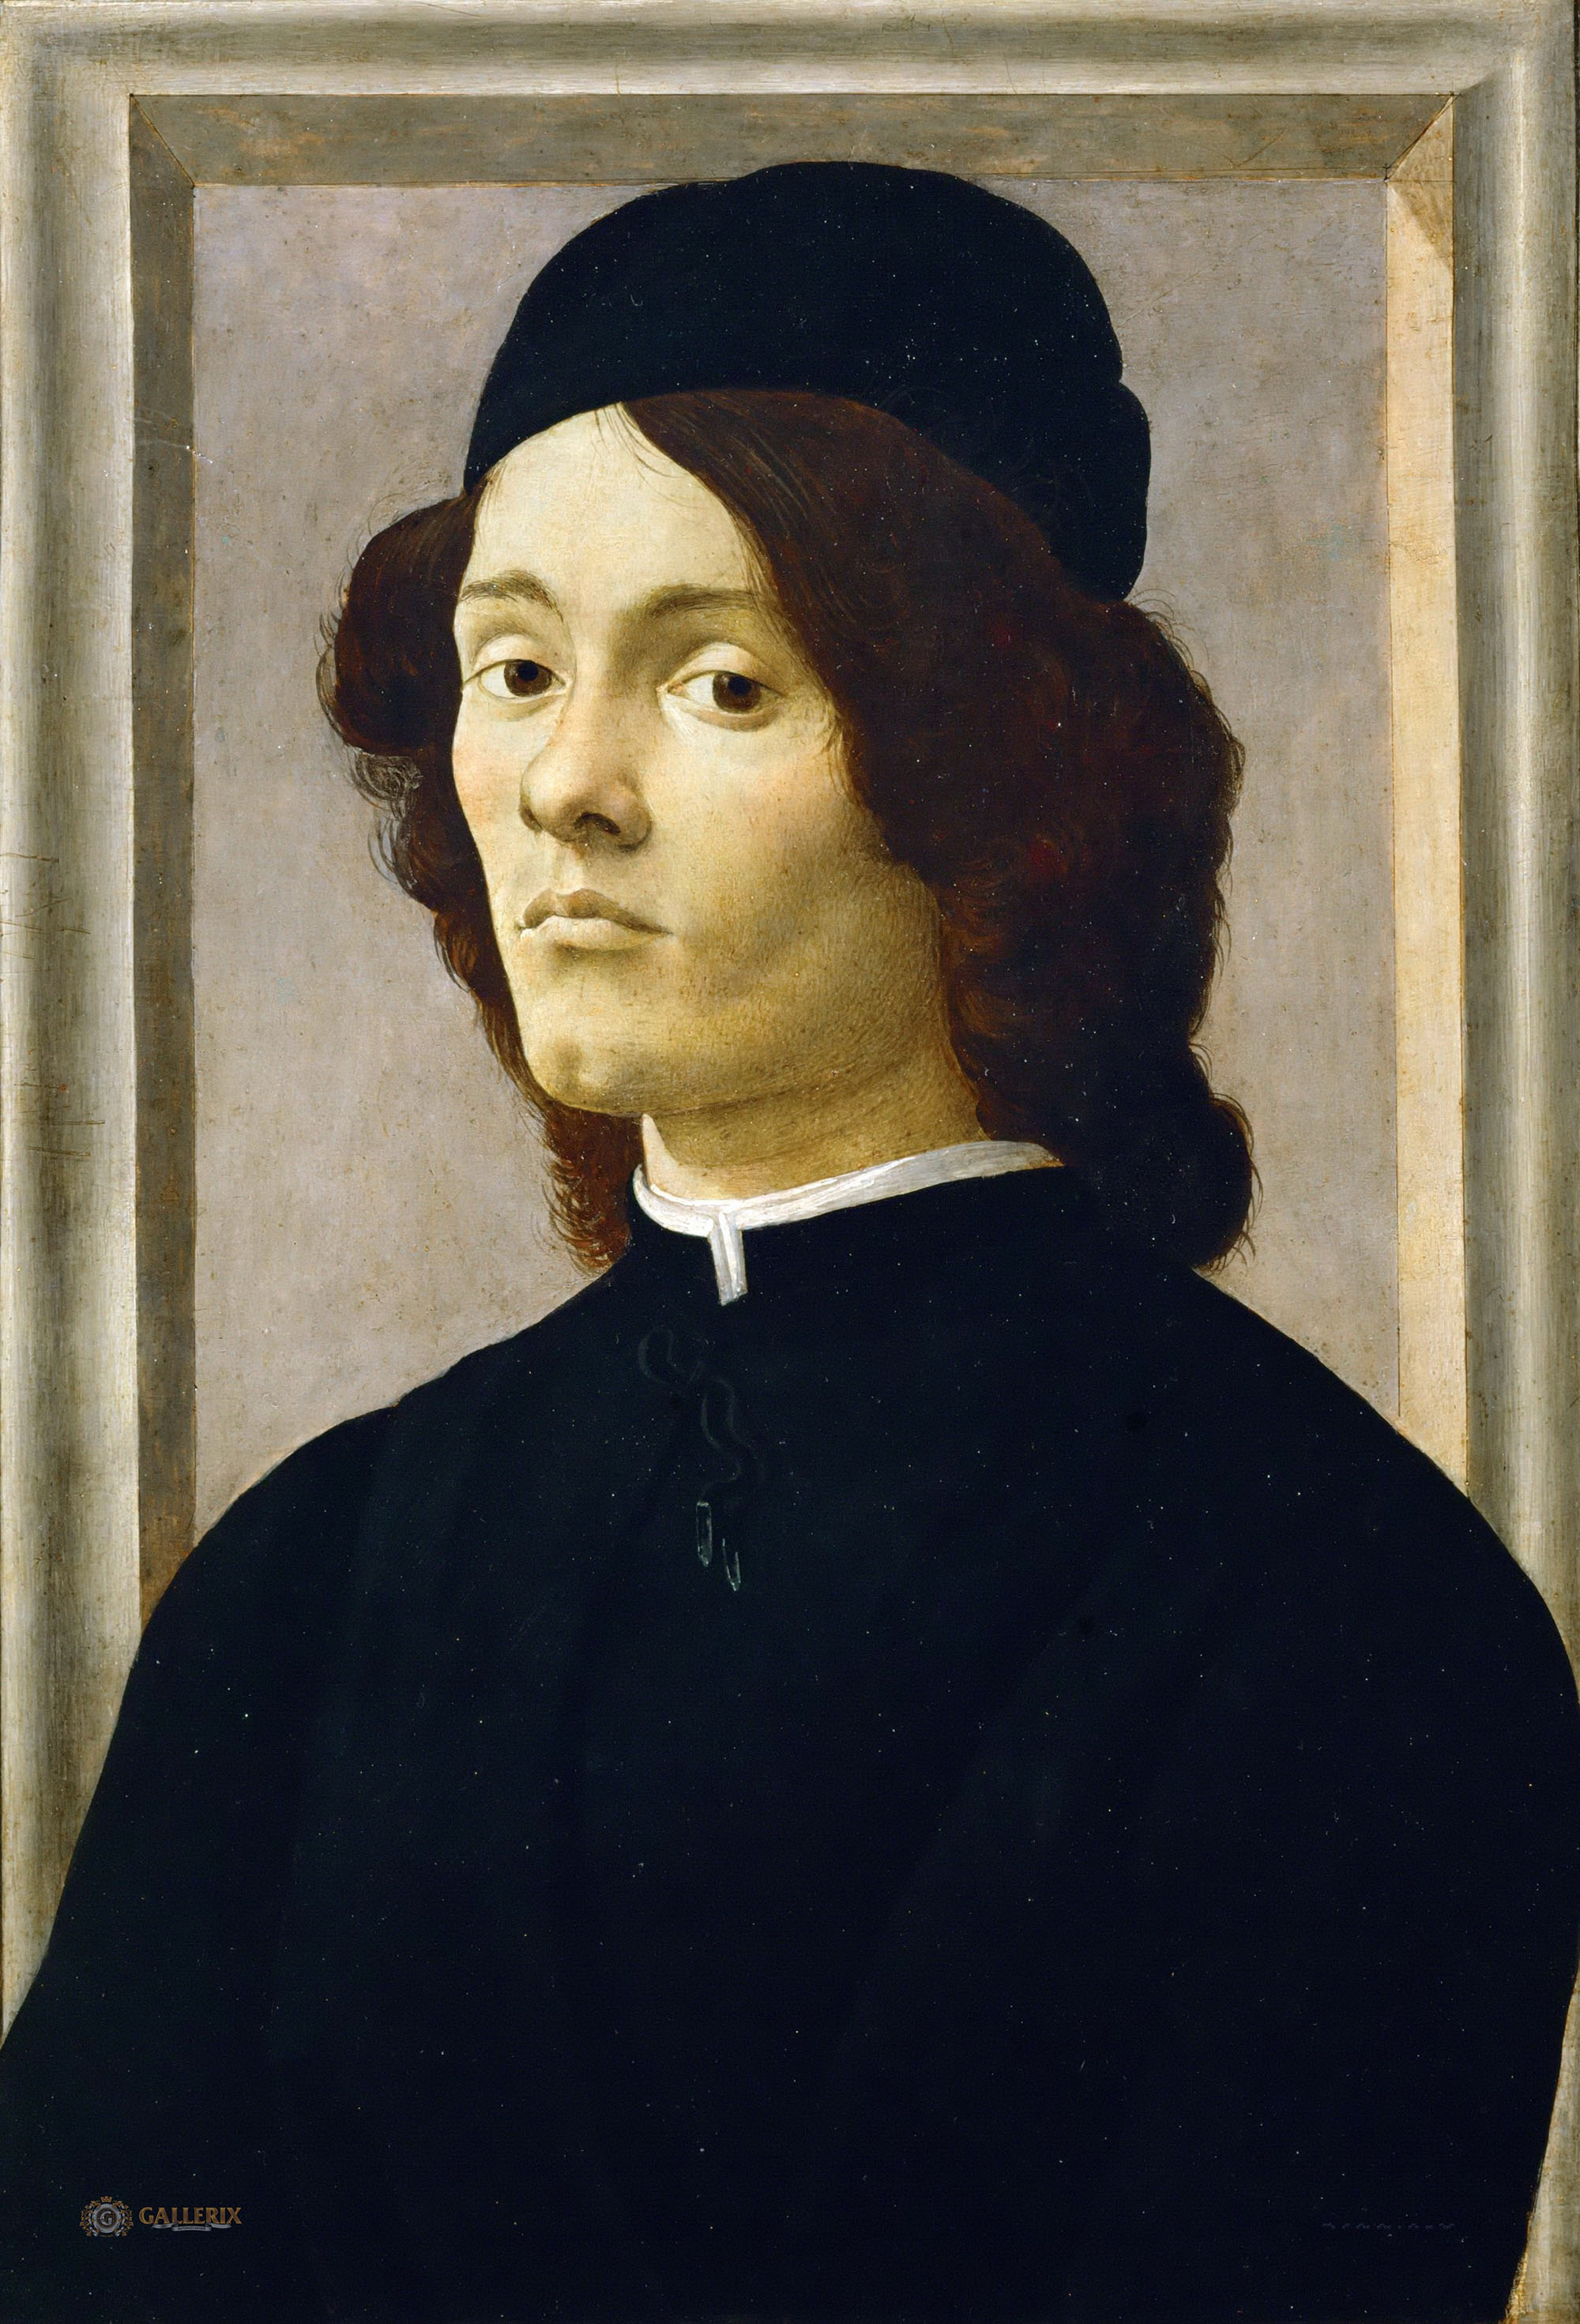 Сандро Боттичелли. "Мужской портрет". 1490-1500. Лувр, Париж.